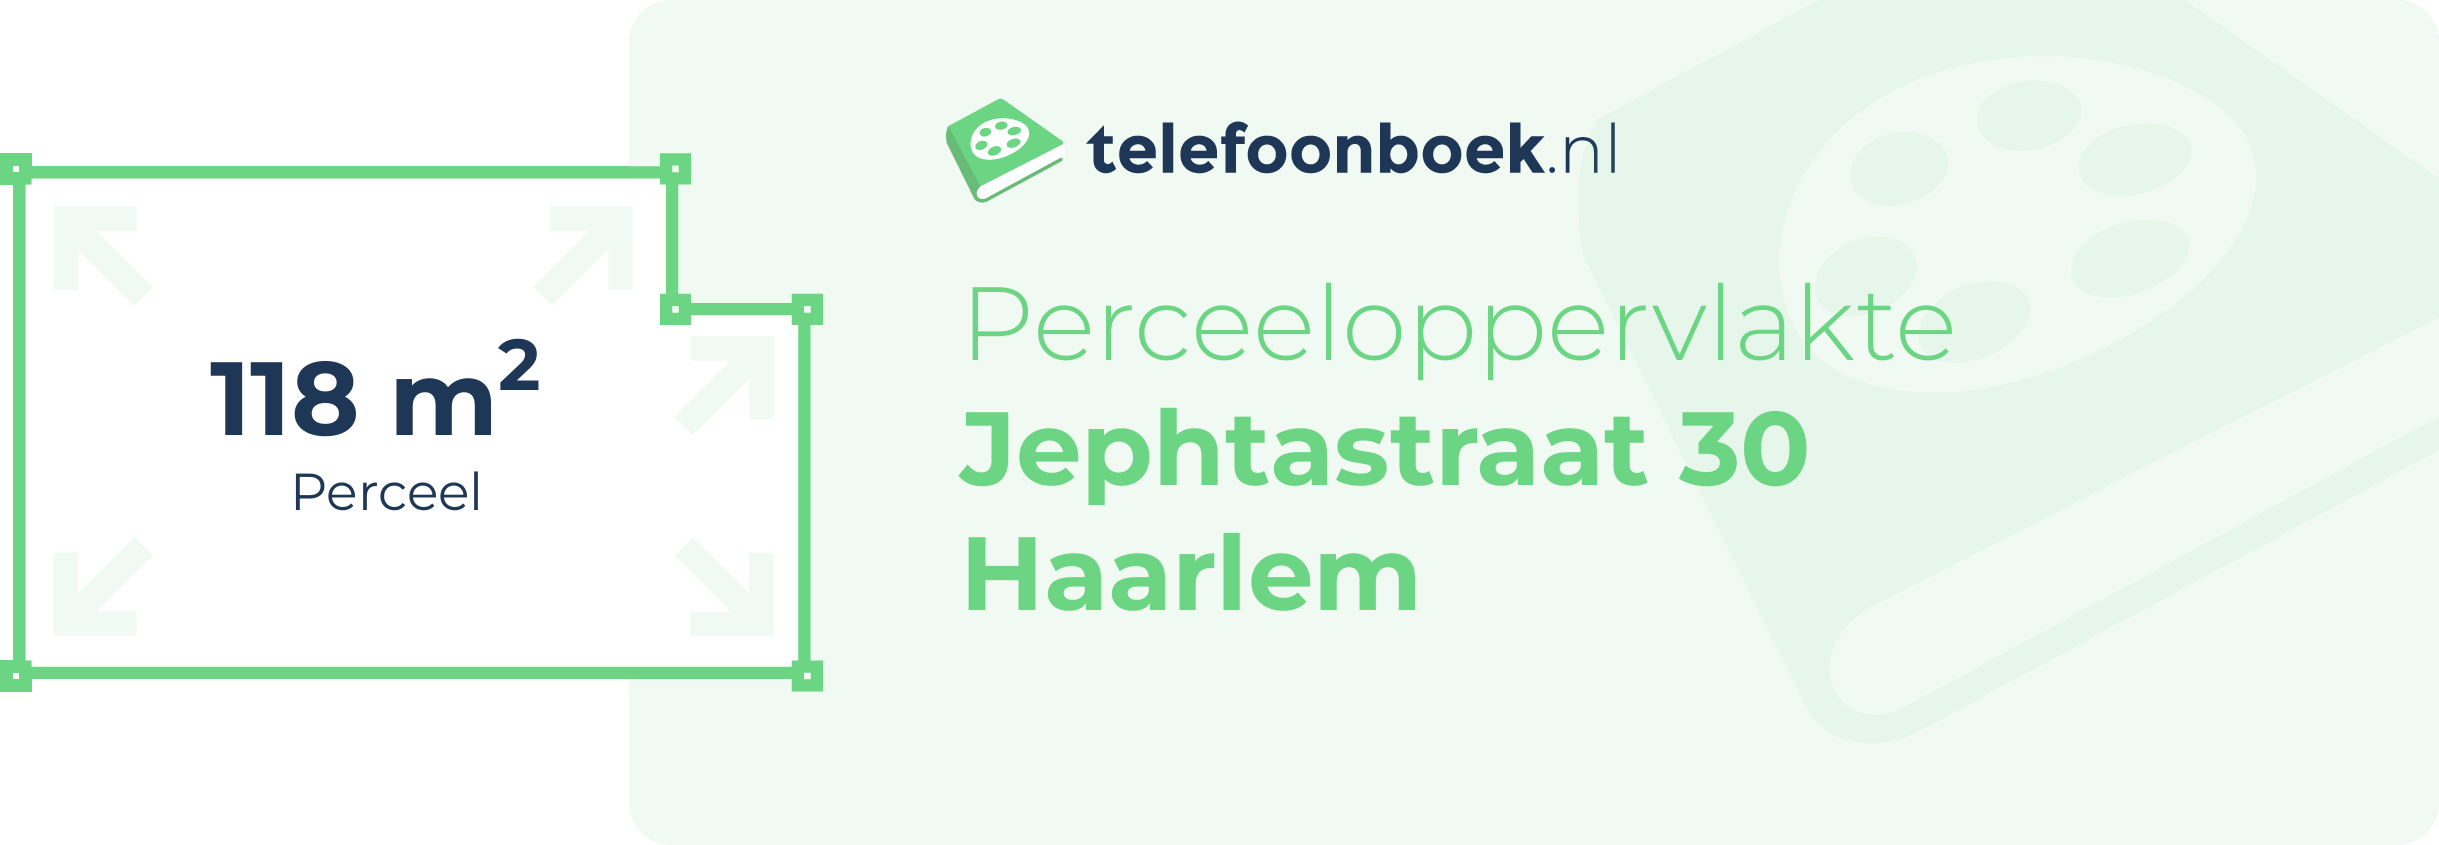 Perceeloppervlakte Jephtastraat 30 Haarlem